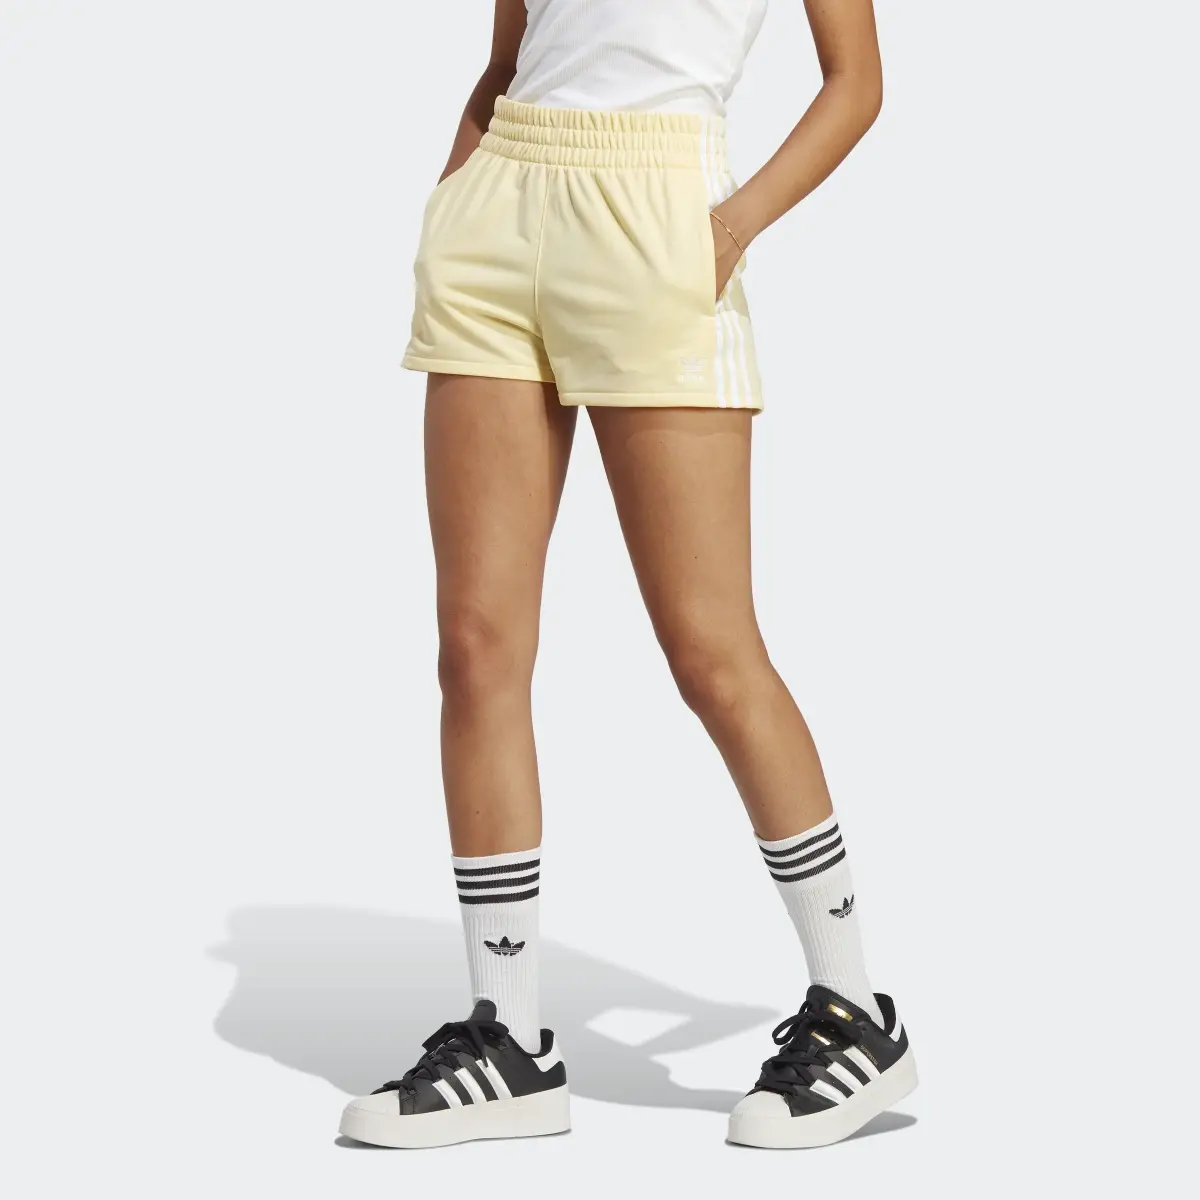 Adidas 3-Stripes Shorts. 1